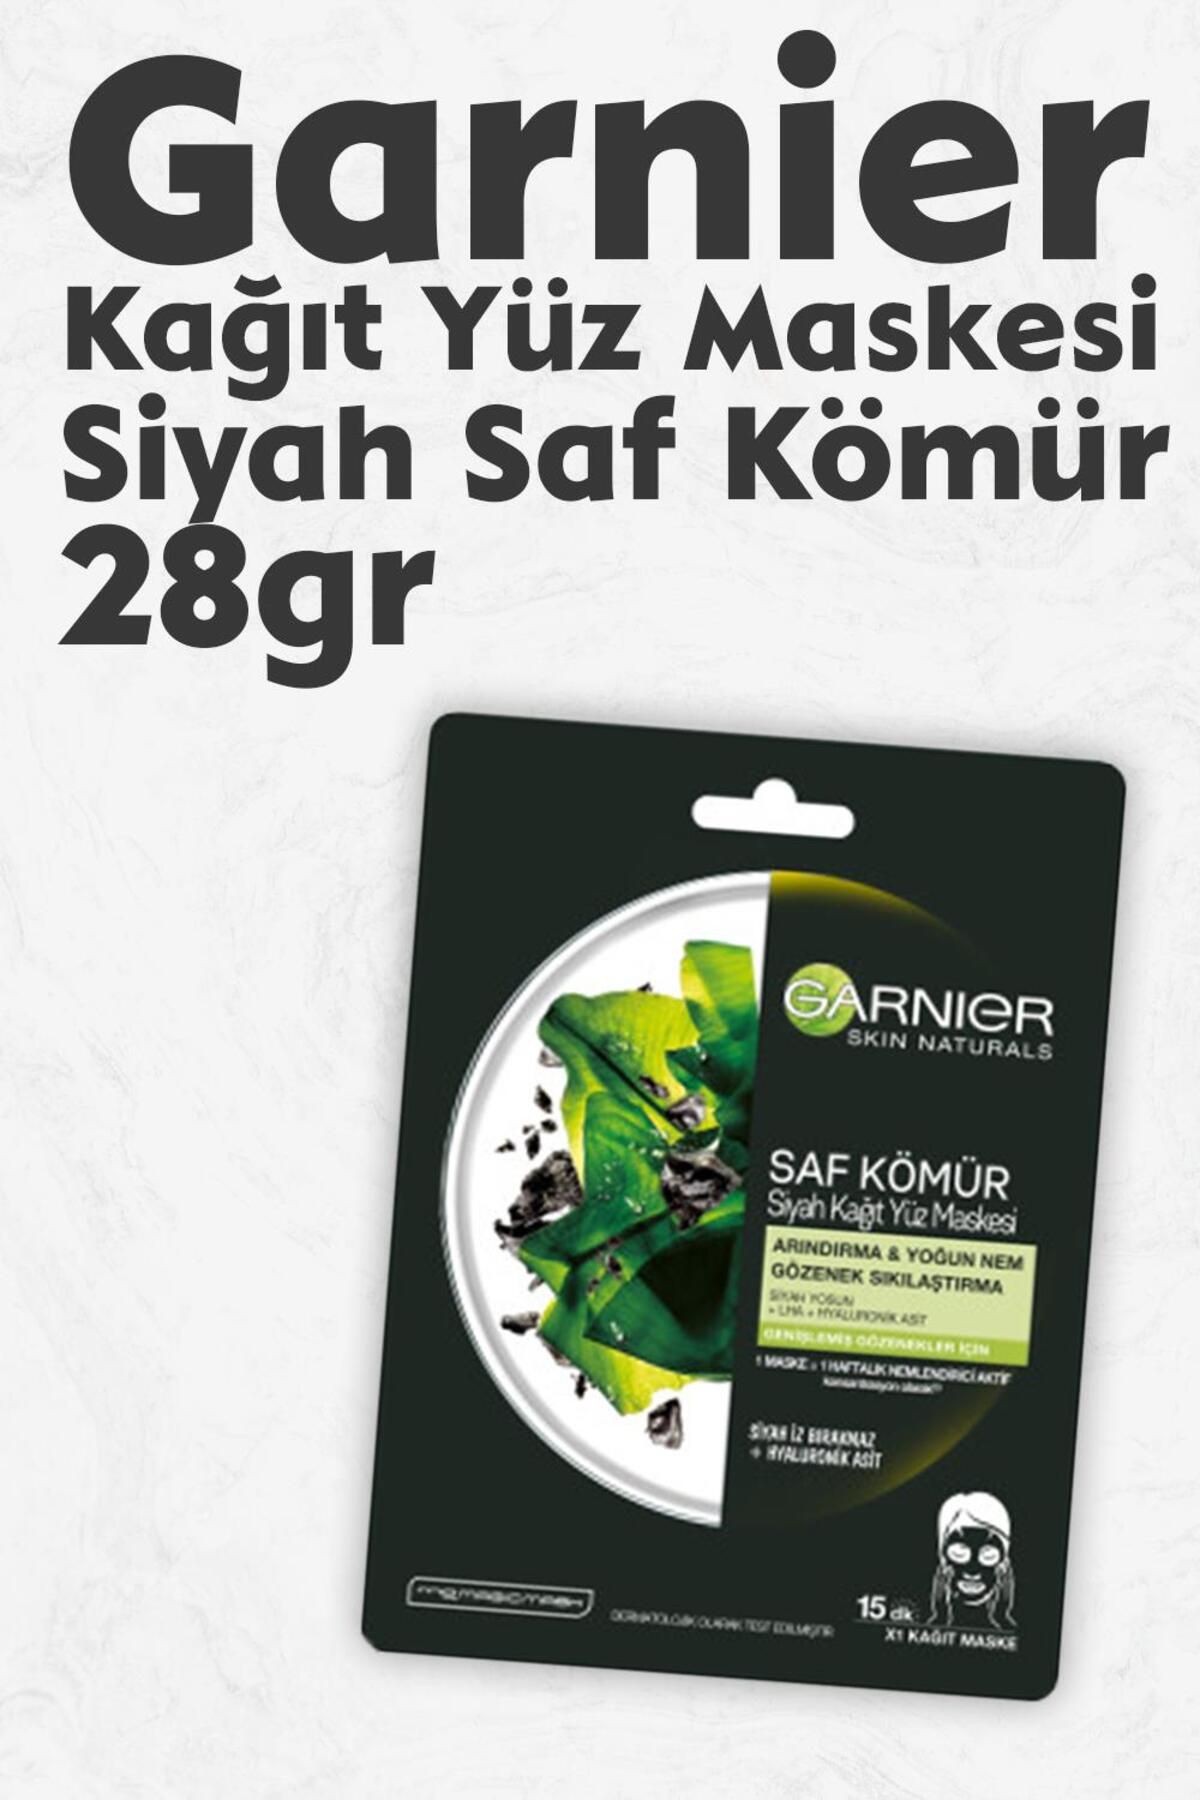 Garnier Kağıt Yüz Maskesi Siyah Saf Kömür 28 gr